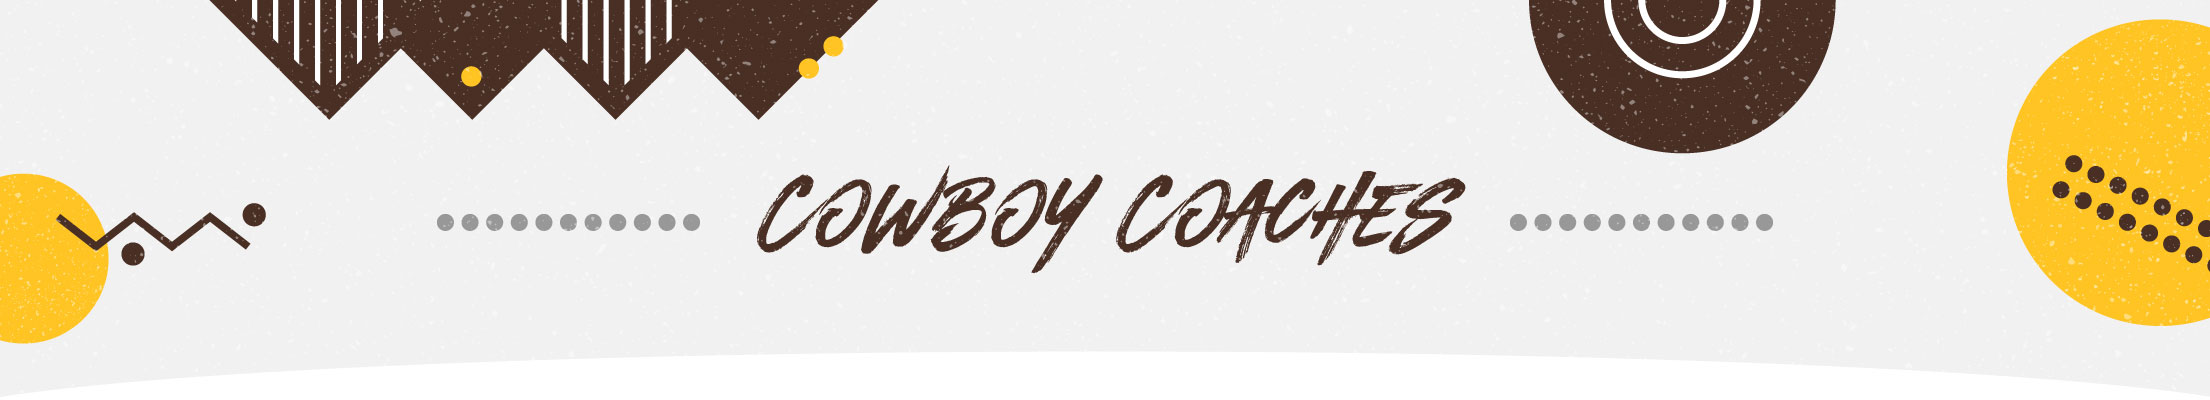 Cowboy Coaches